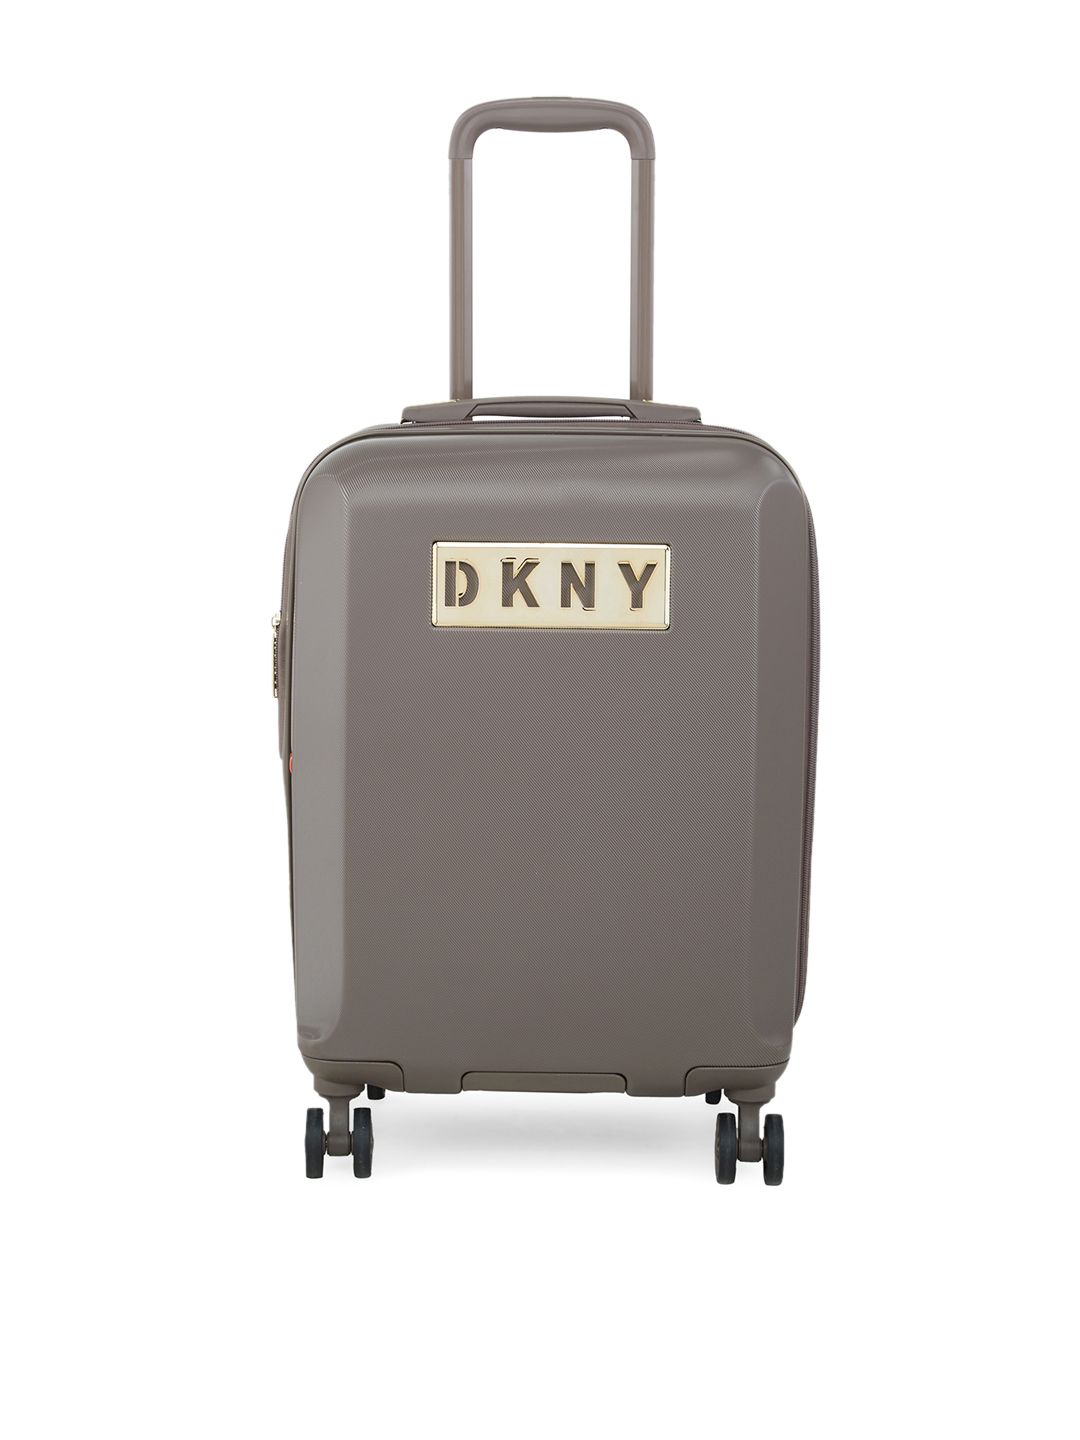 DKNY Alchemy Range Bronze Hard Cabin Suitcase Price in India